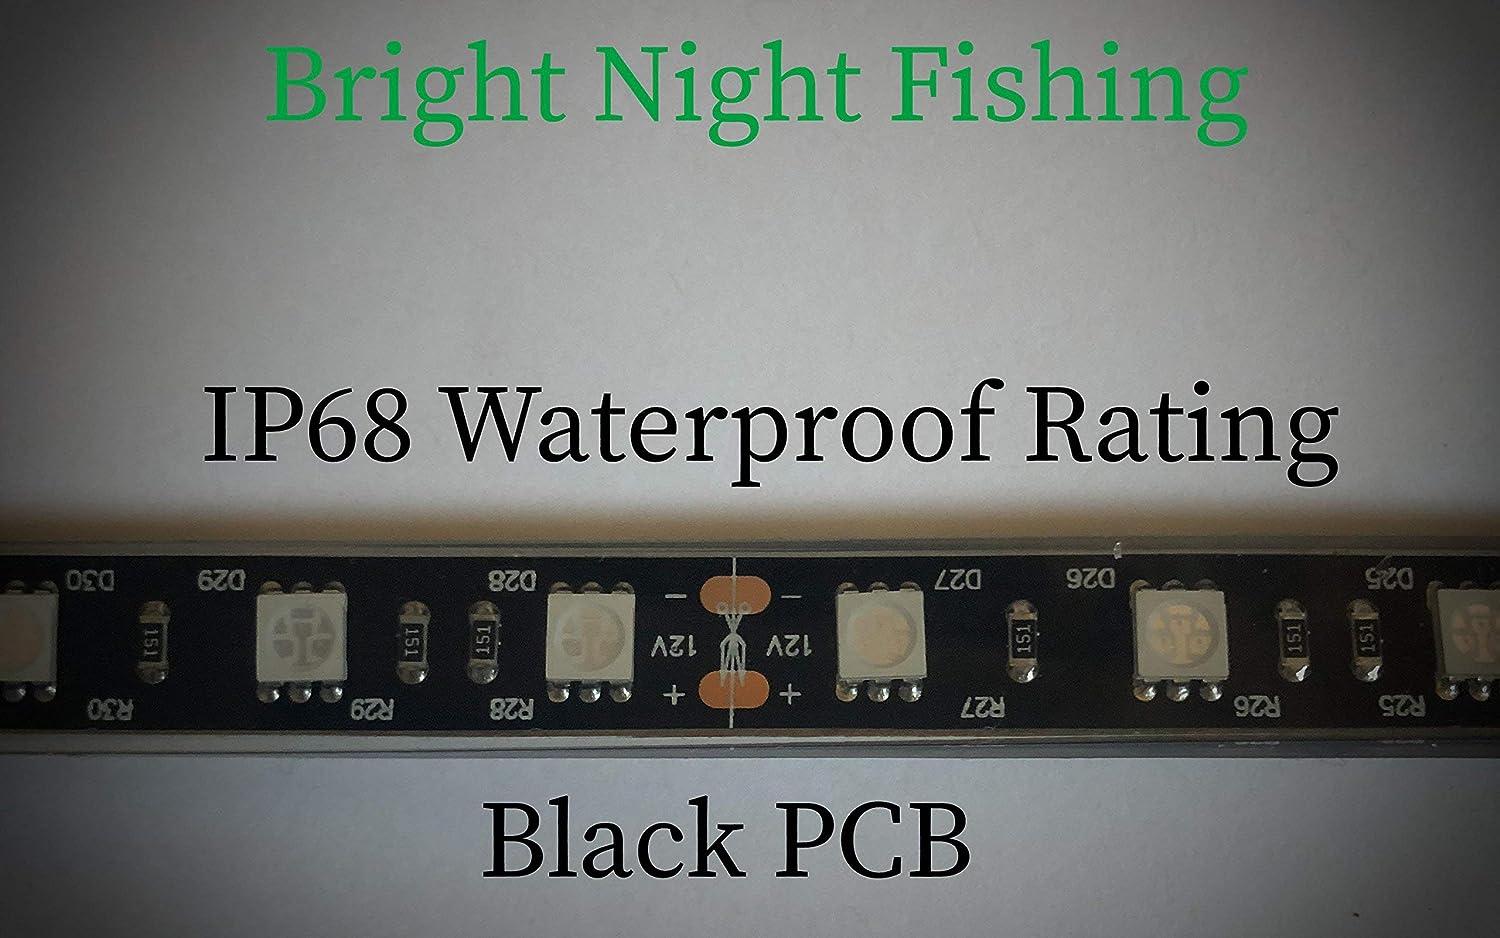 Bright Night 20 Foot UV LED Strip, Black Fishing Light, Fluorescent,  Florescent, Ultraviolet Boat bass Fishing 12v dc Priority Shipping Pontoon  Kayak John Boat Florescent line Glow